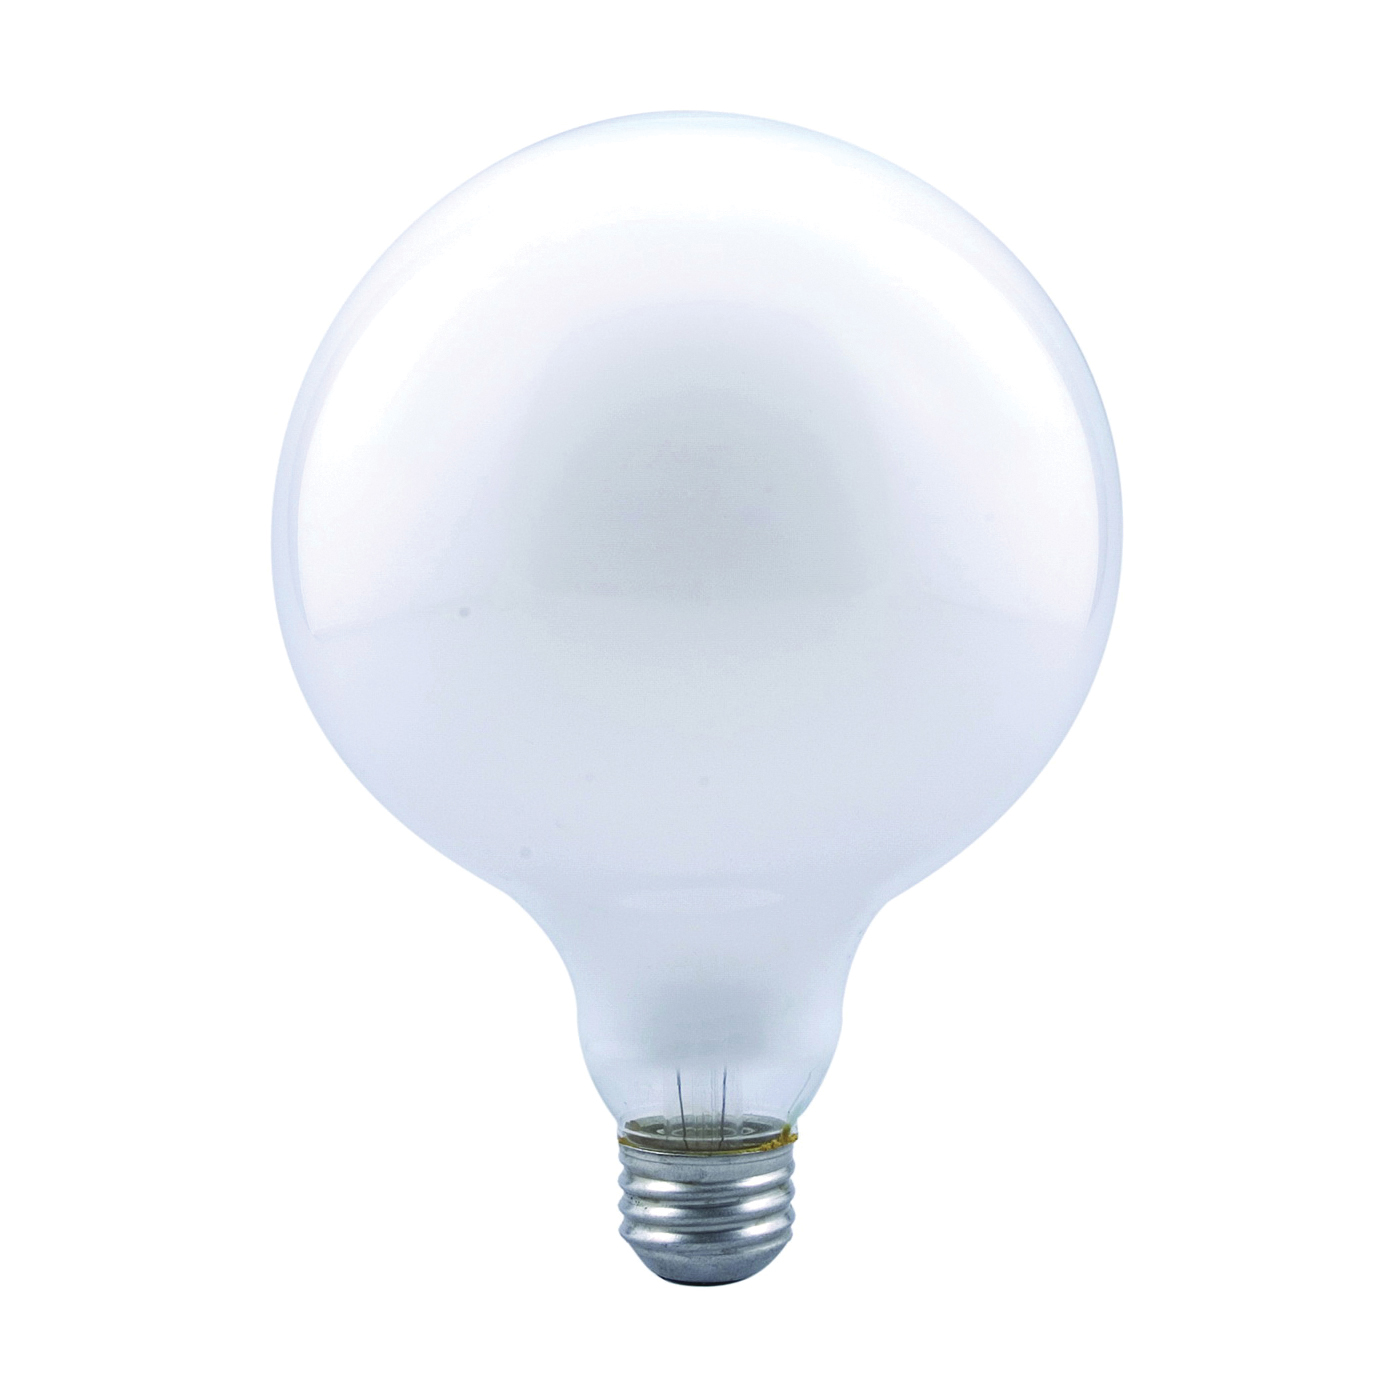 15792 Incandescent Lamp, 60 W, G40 Lamp, Medium Lamp Base, 490 Lumens, 5000 K Color Temp, 2500 hr Average Life